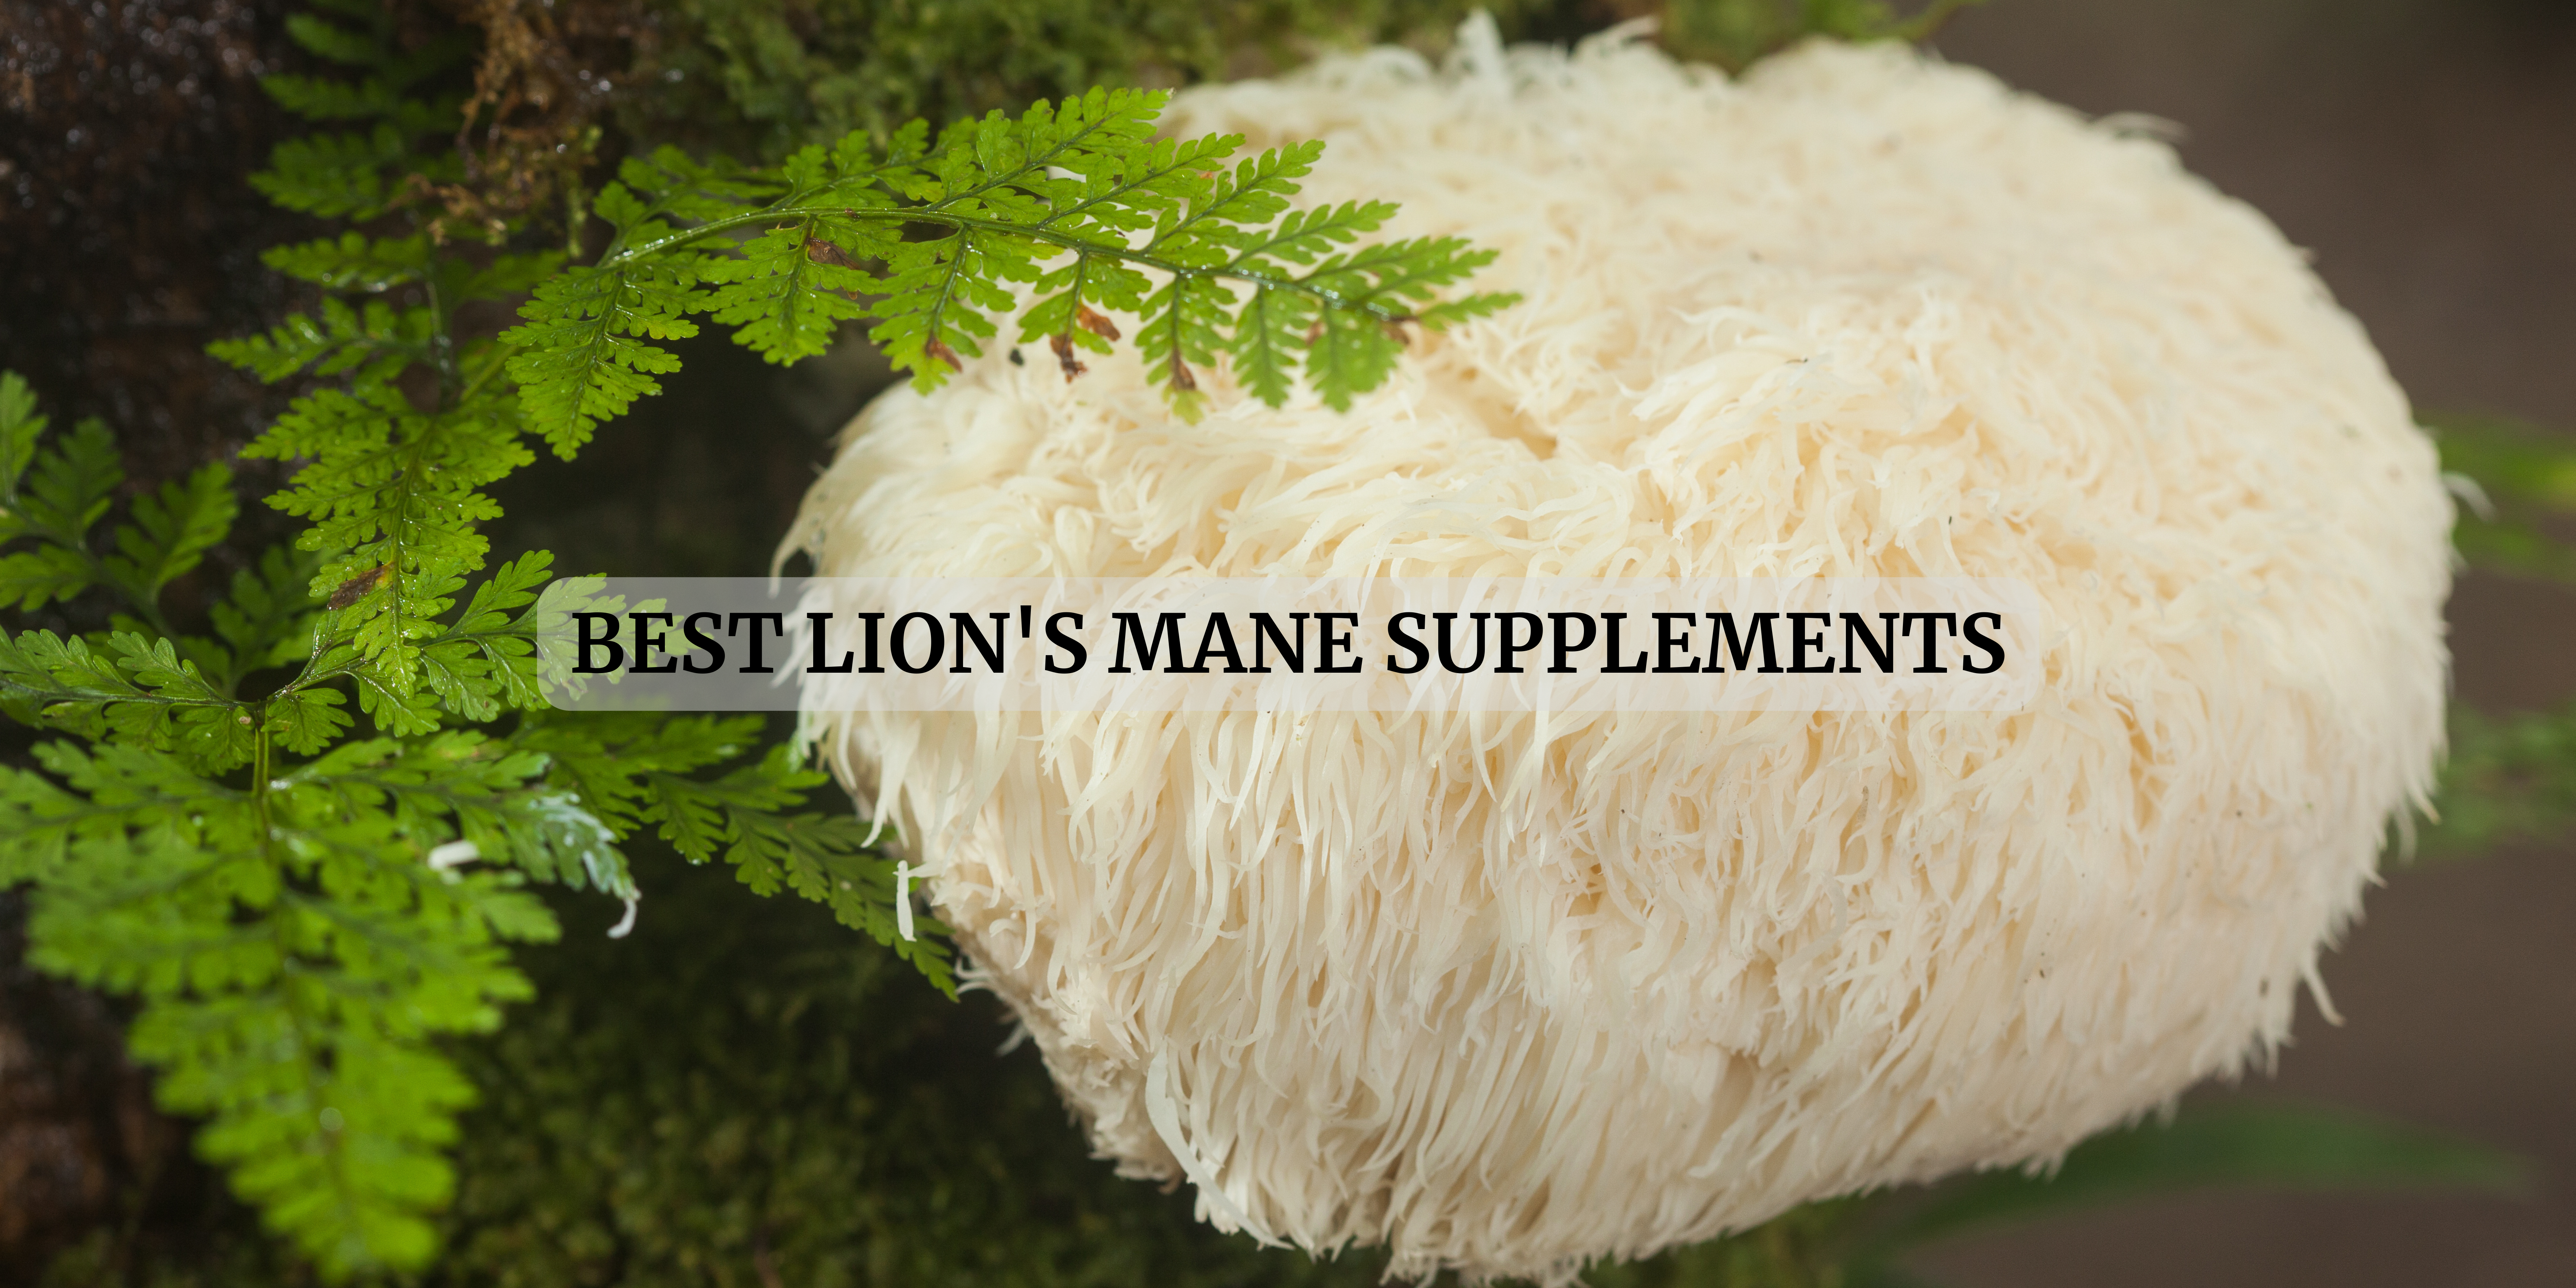 lion's mane supplements in Sweden